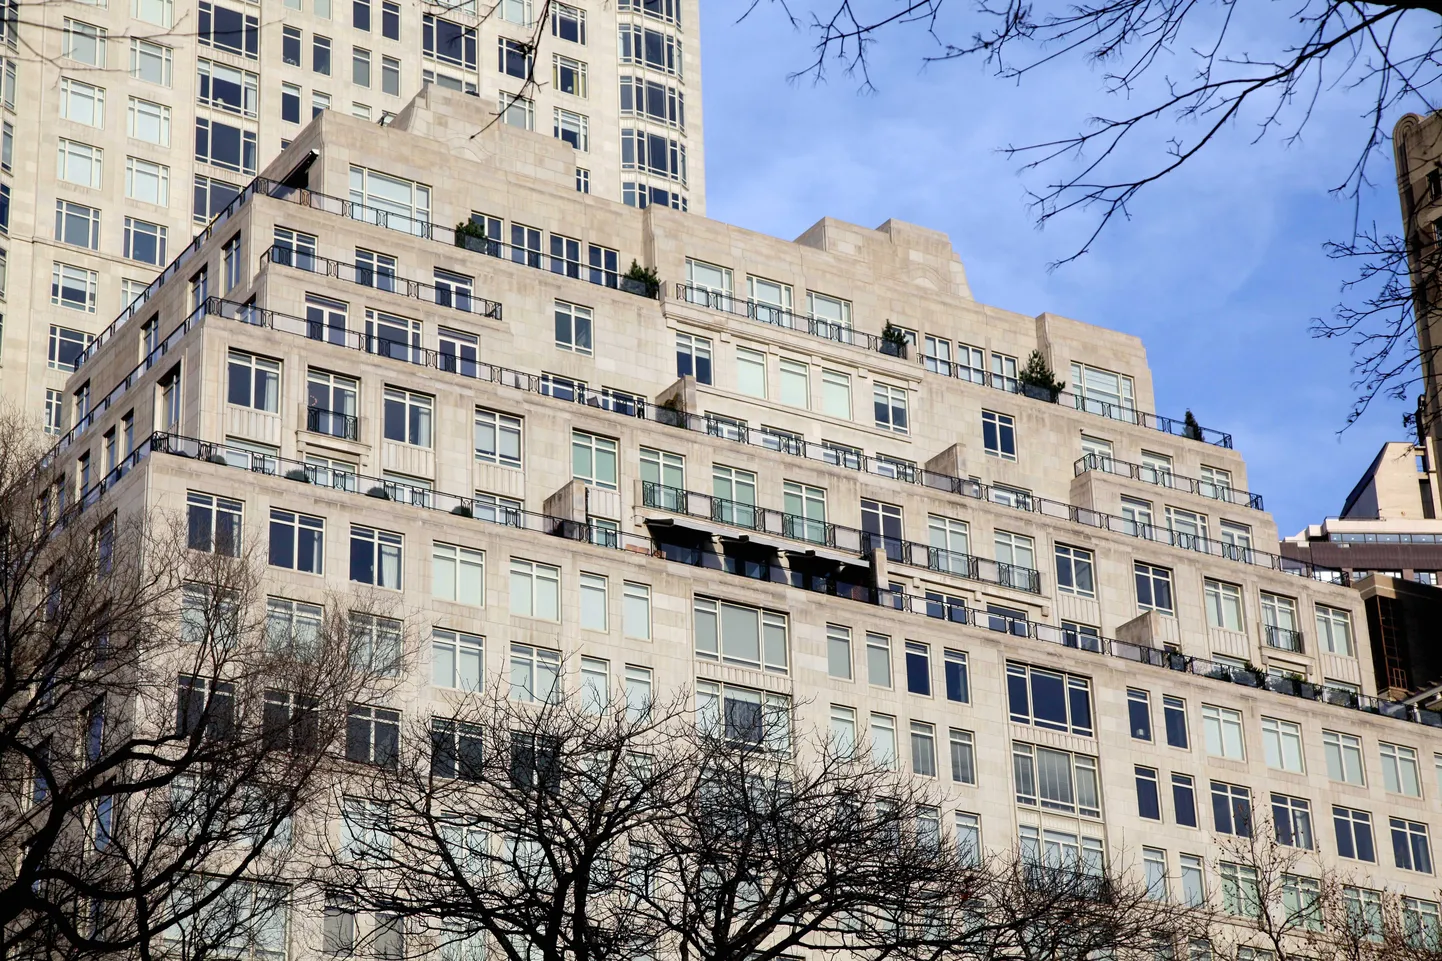 Dmitri Rõbolovlevi tütrele kuuluv korter asub aadressil 15 Central Park West (pildil).